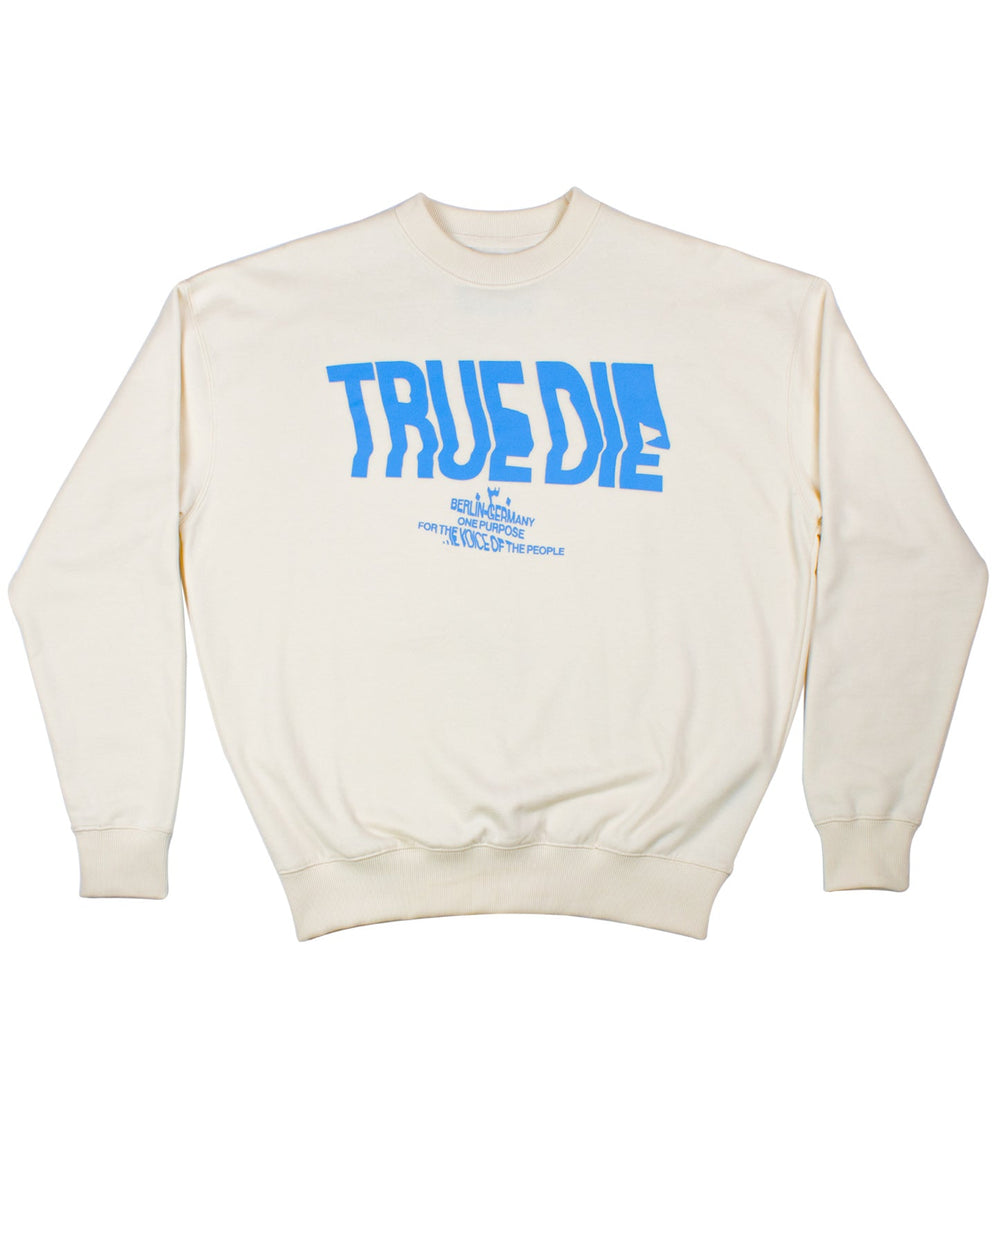 Cream Sweater - True Die 361